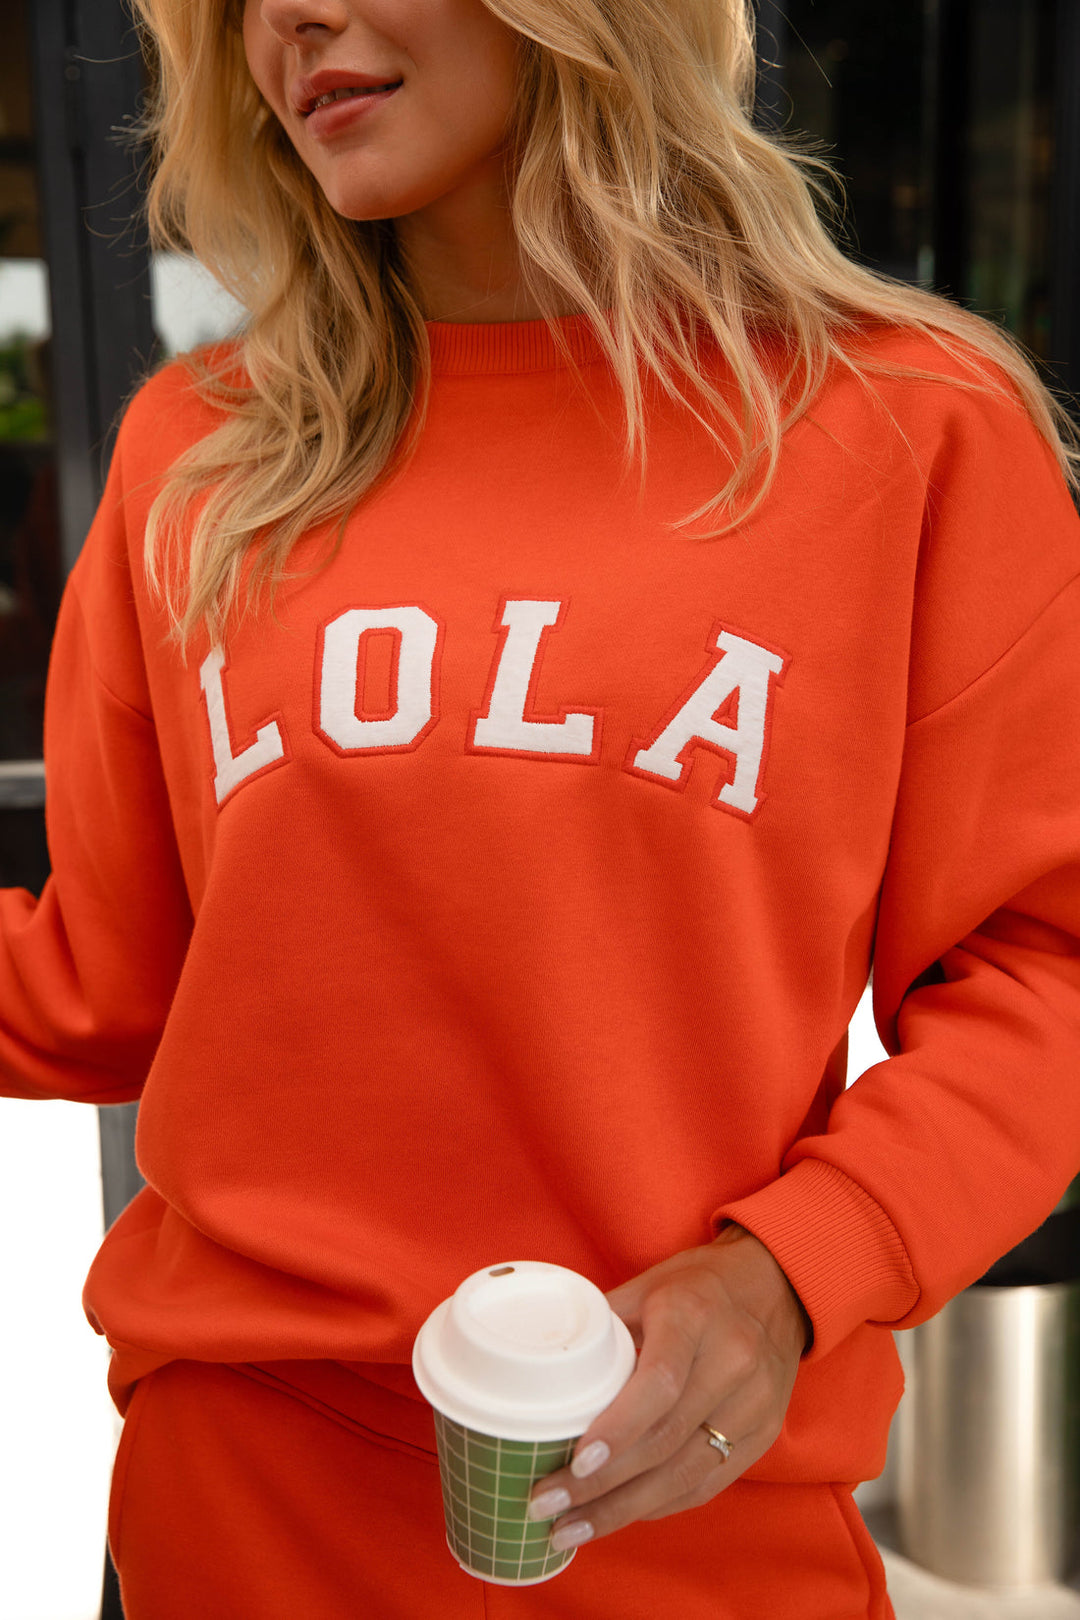 Lola sweater